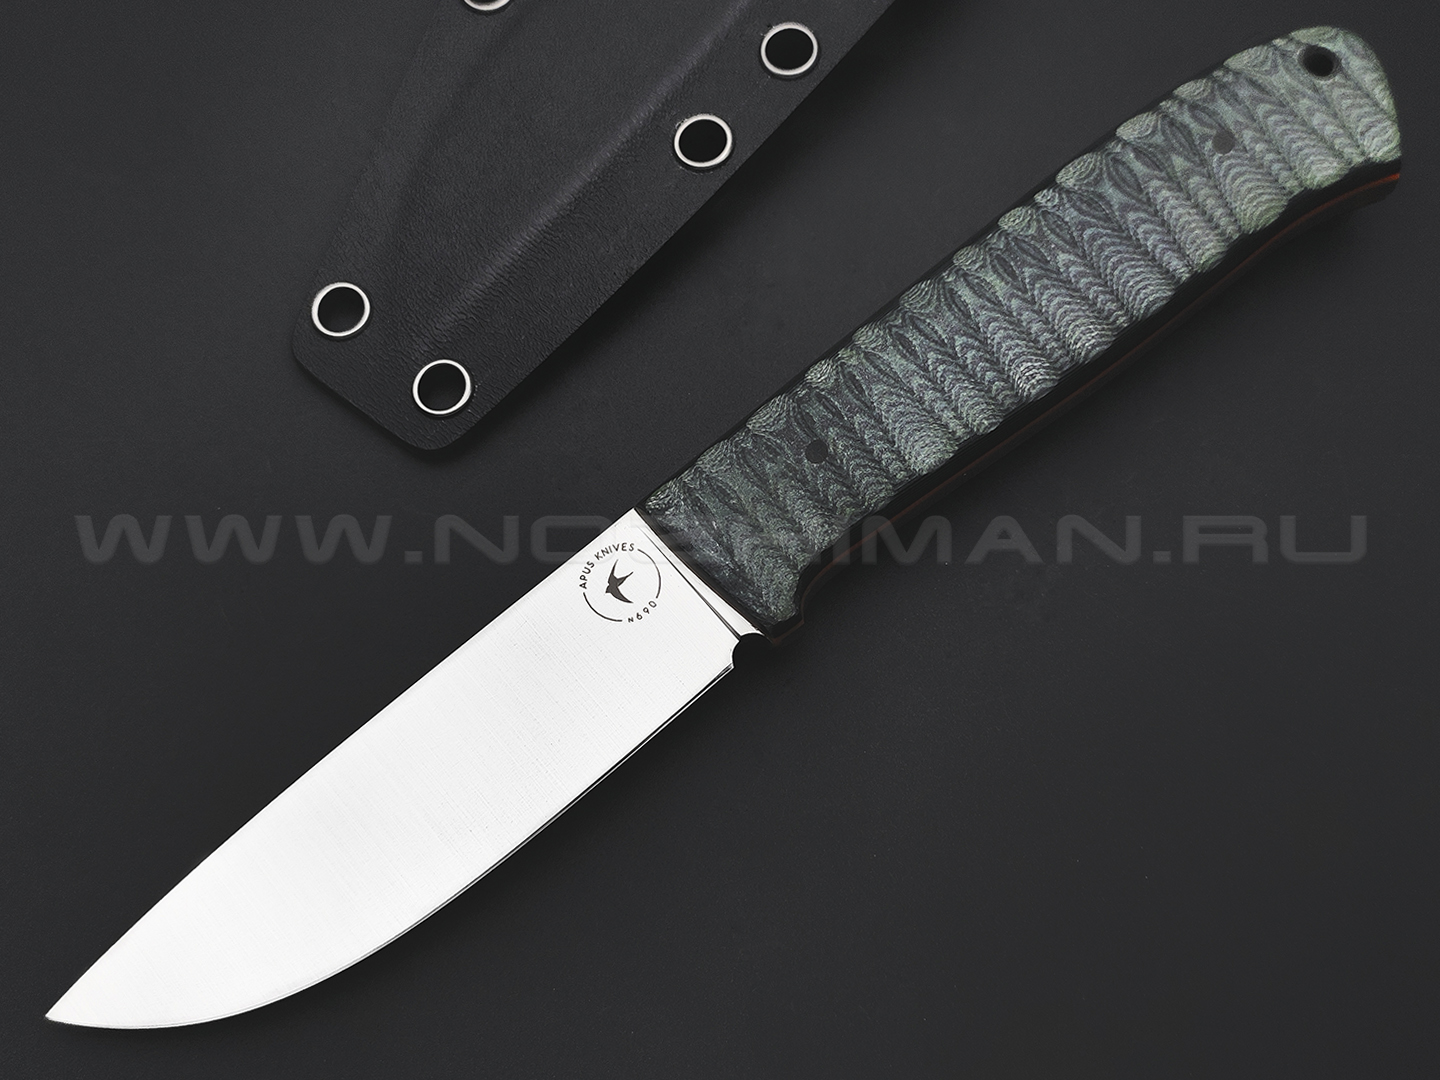 Apus Knives нож Raider mini сталь N690 satin, рукоять G10 black & green